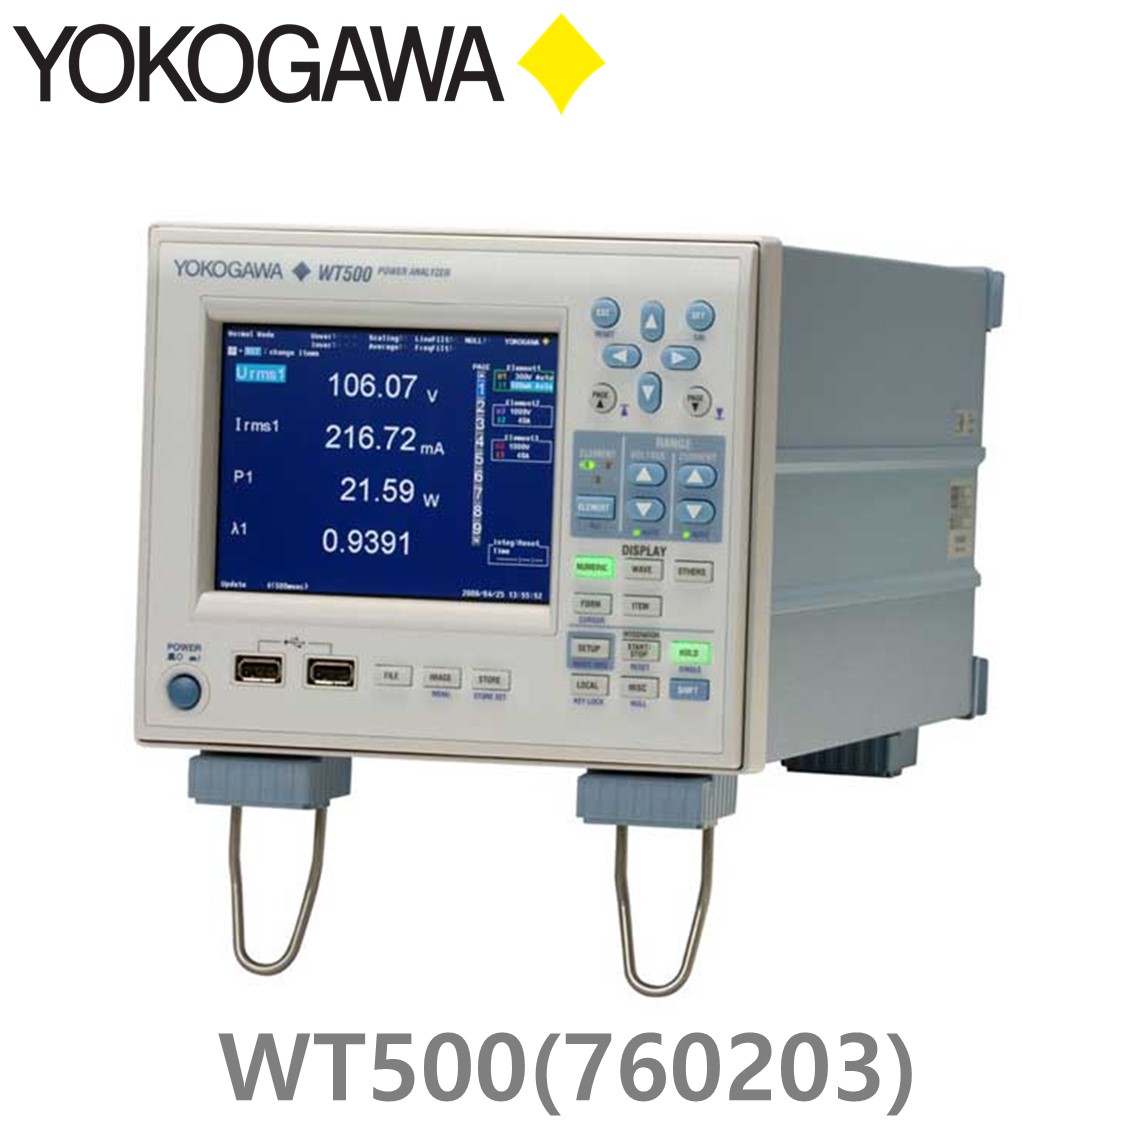 [ YOKOGAWA ] WT500(760203) 요꼬가와 전력분석기, 전력분석계